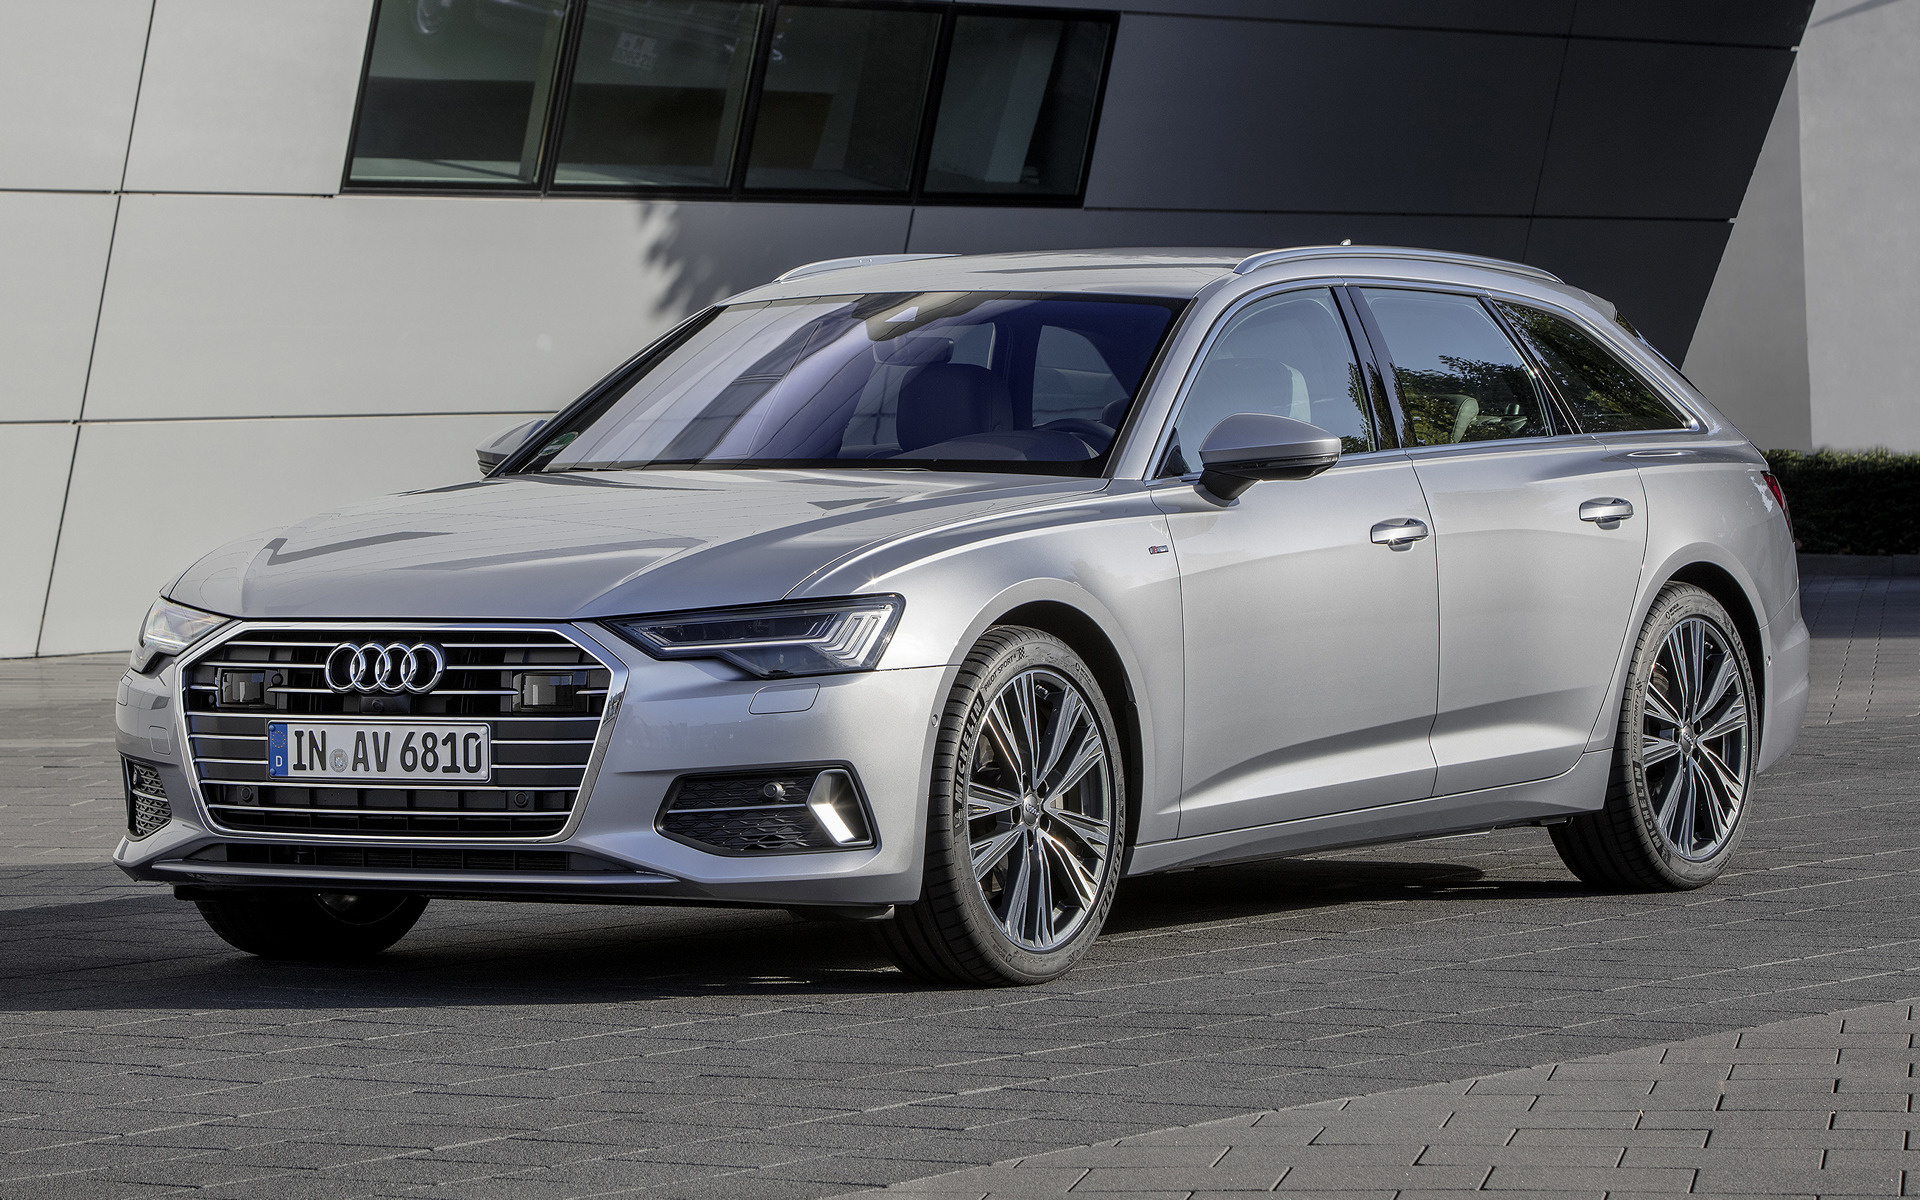 Audi A6 Avant - Audi A6 Avant 2019 Silver , HD Wallpaper & Backgrounds